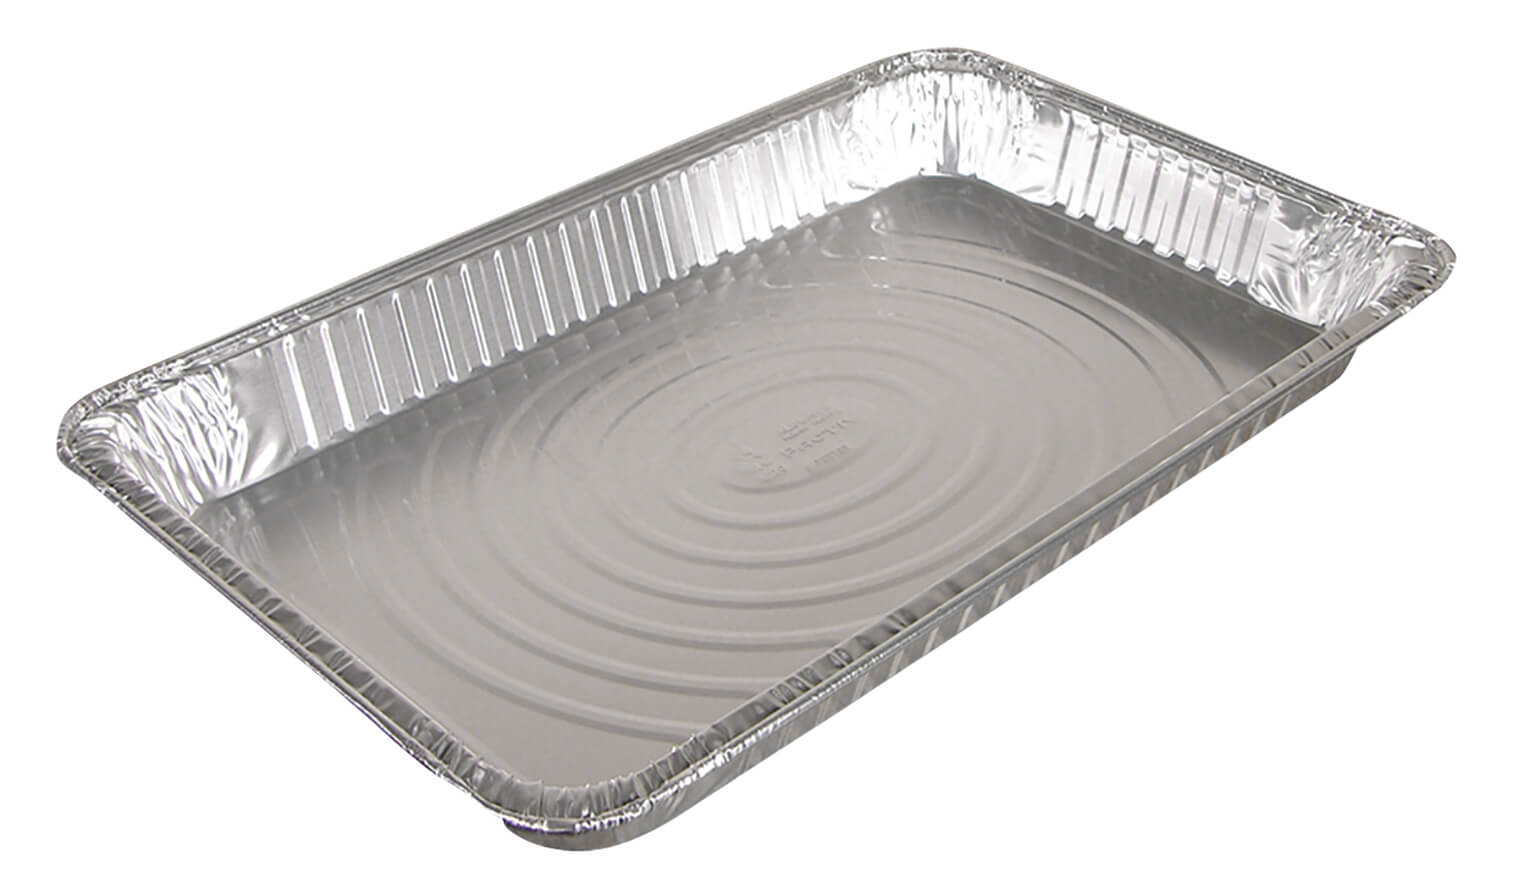 Aluminum Disposable Pots with Lids Medium 4 Quarts (Pack of 2), Silver